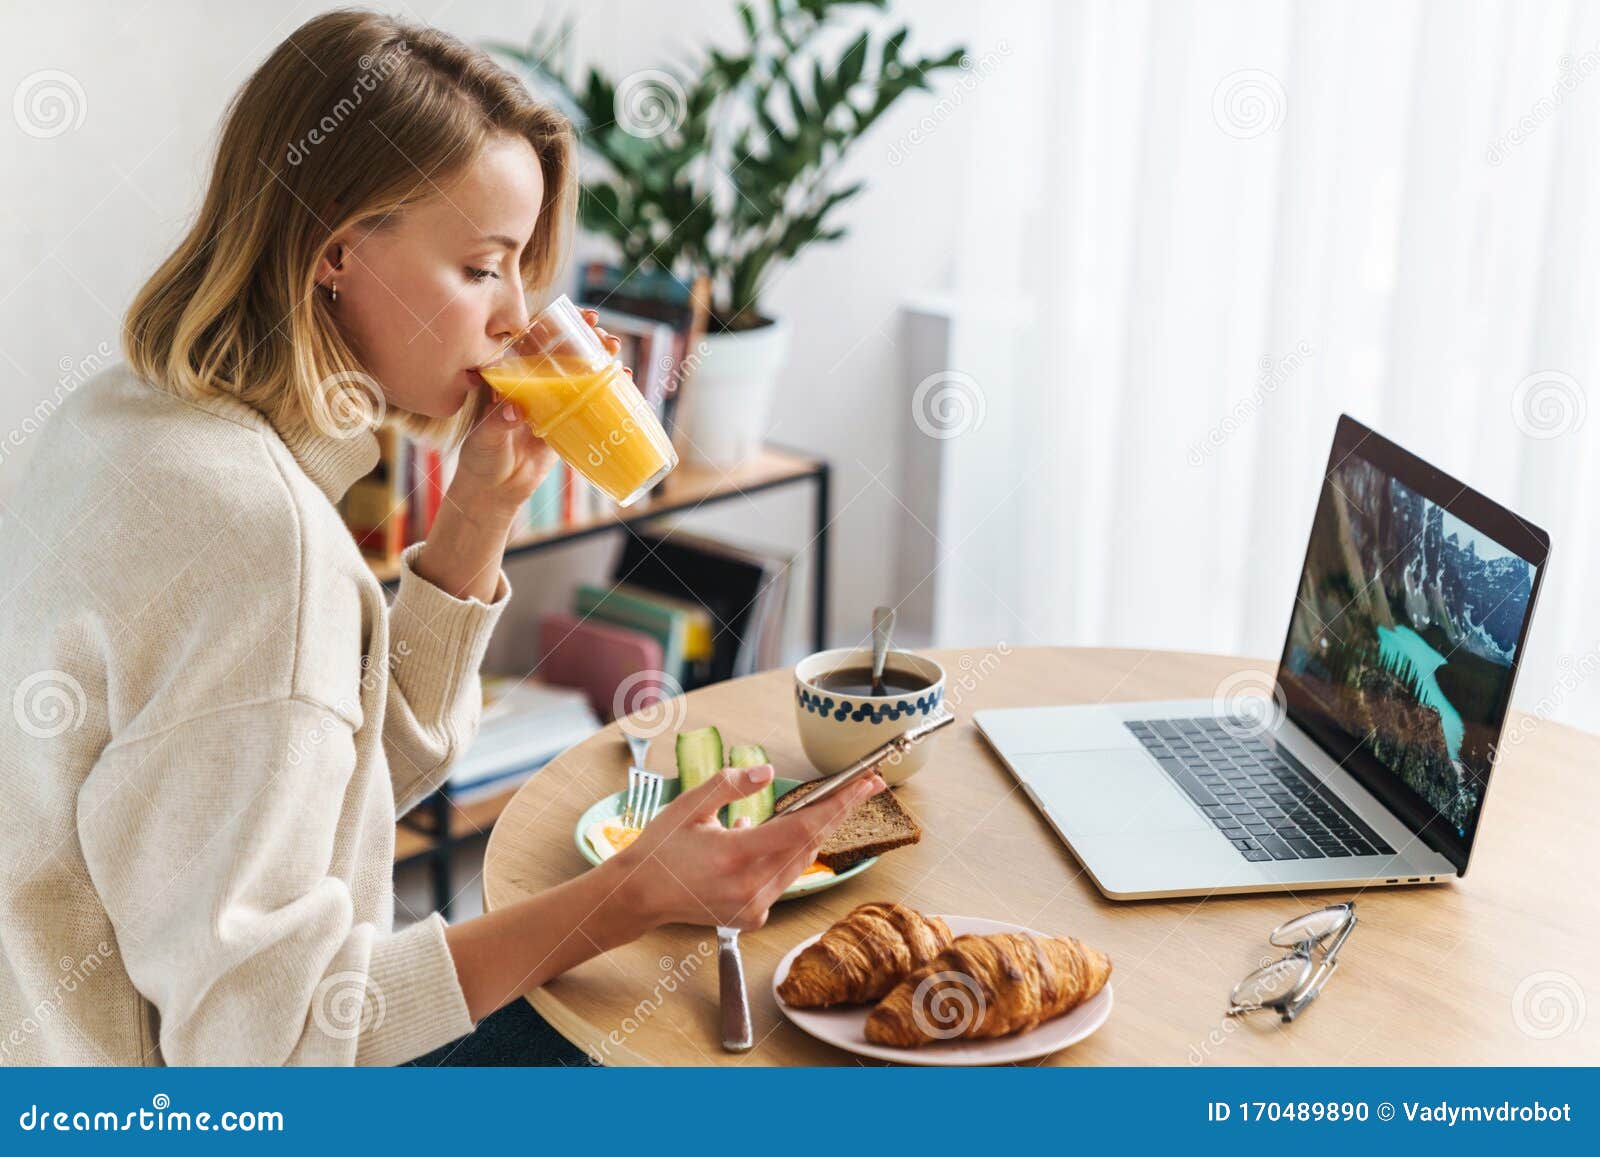 Expresa tu momento " in situ " con una imagen - Página 5 Photo-smiling-woman-using-laptop-cellphone-having-breakfast-photo-smiling-blonde-woman-using-laptop-cellphone-170489890